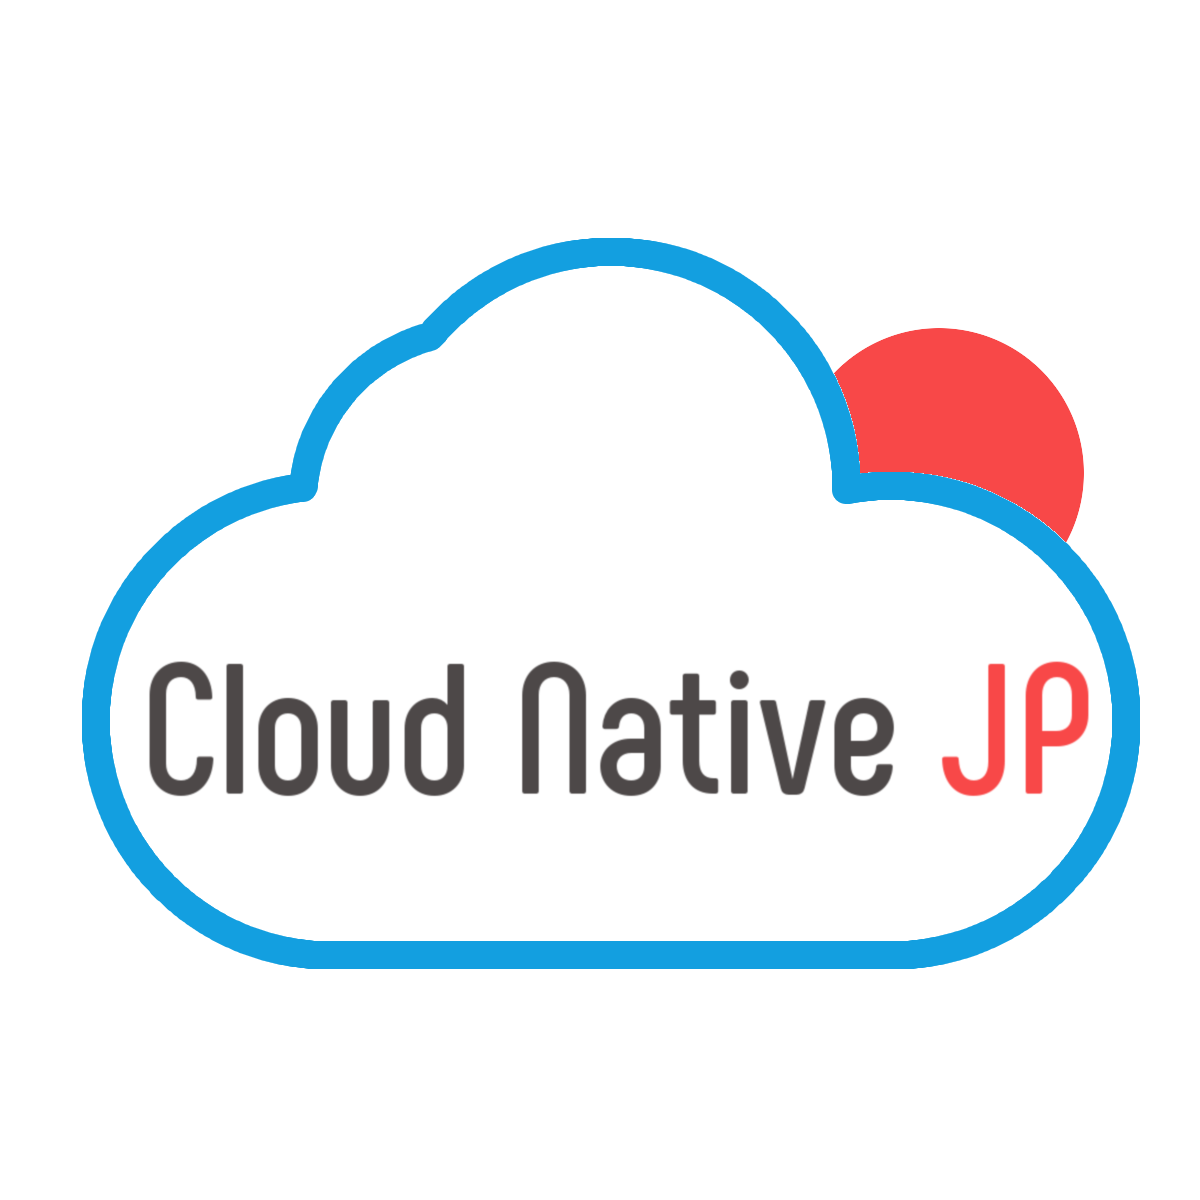 Cloud Native JP-logo